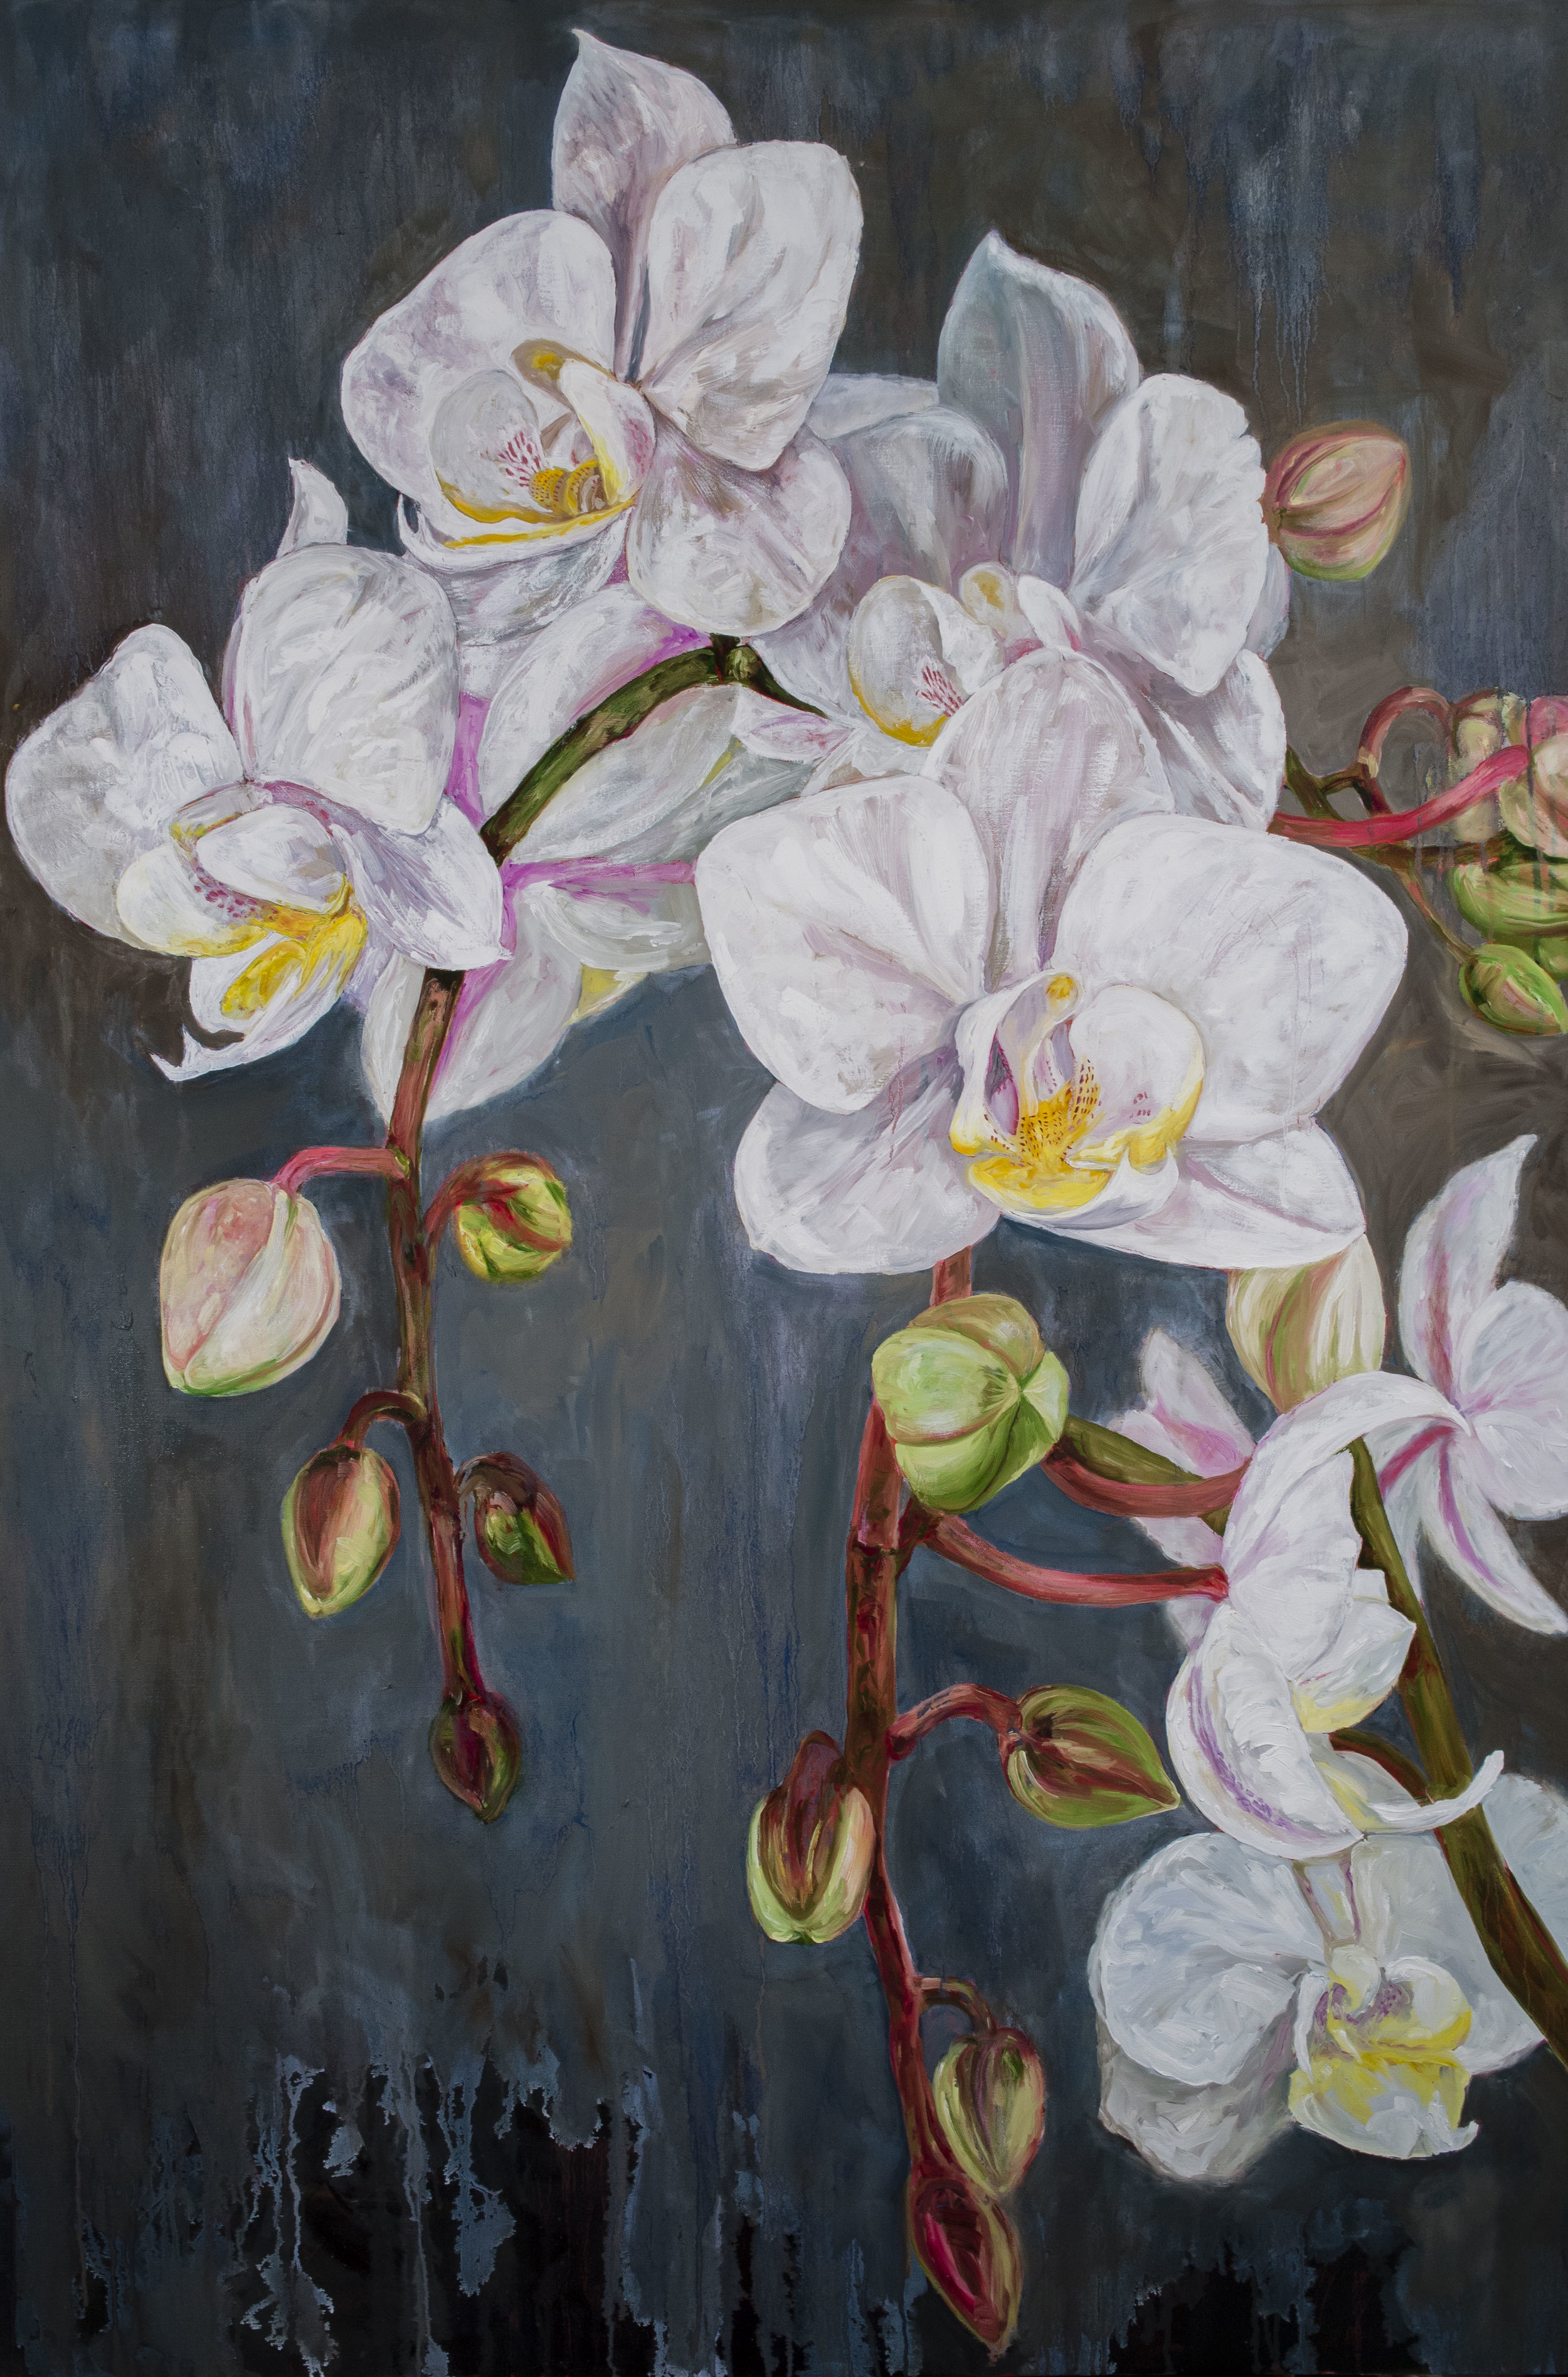   Window Orchid   Oil  60”x 40” 